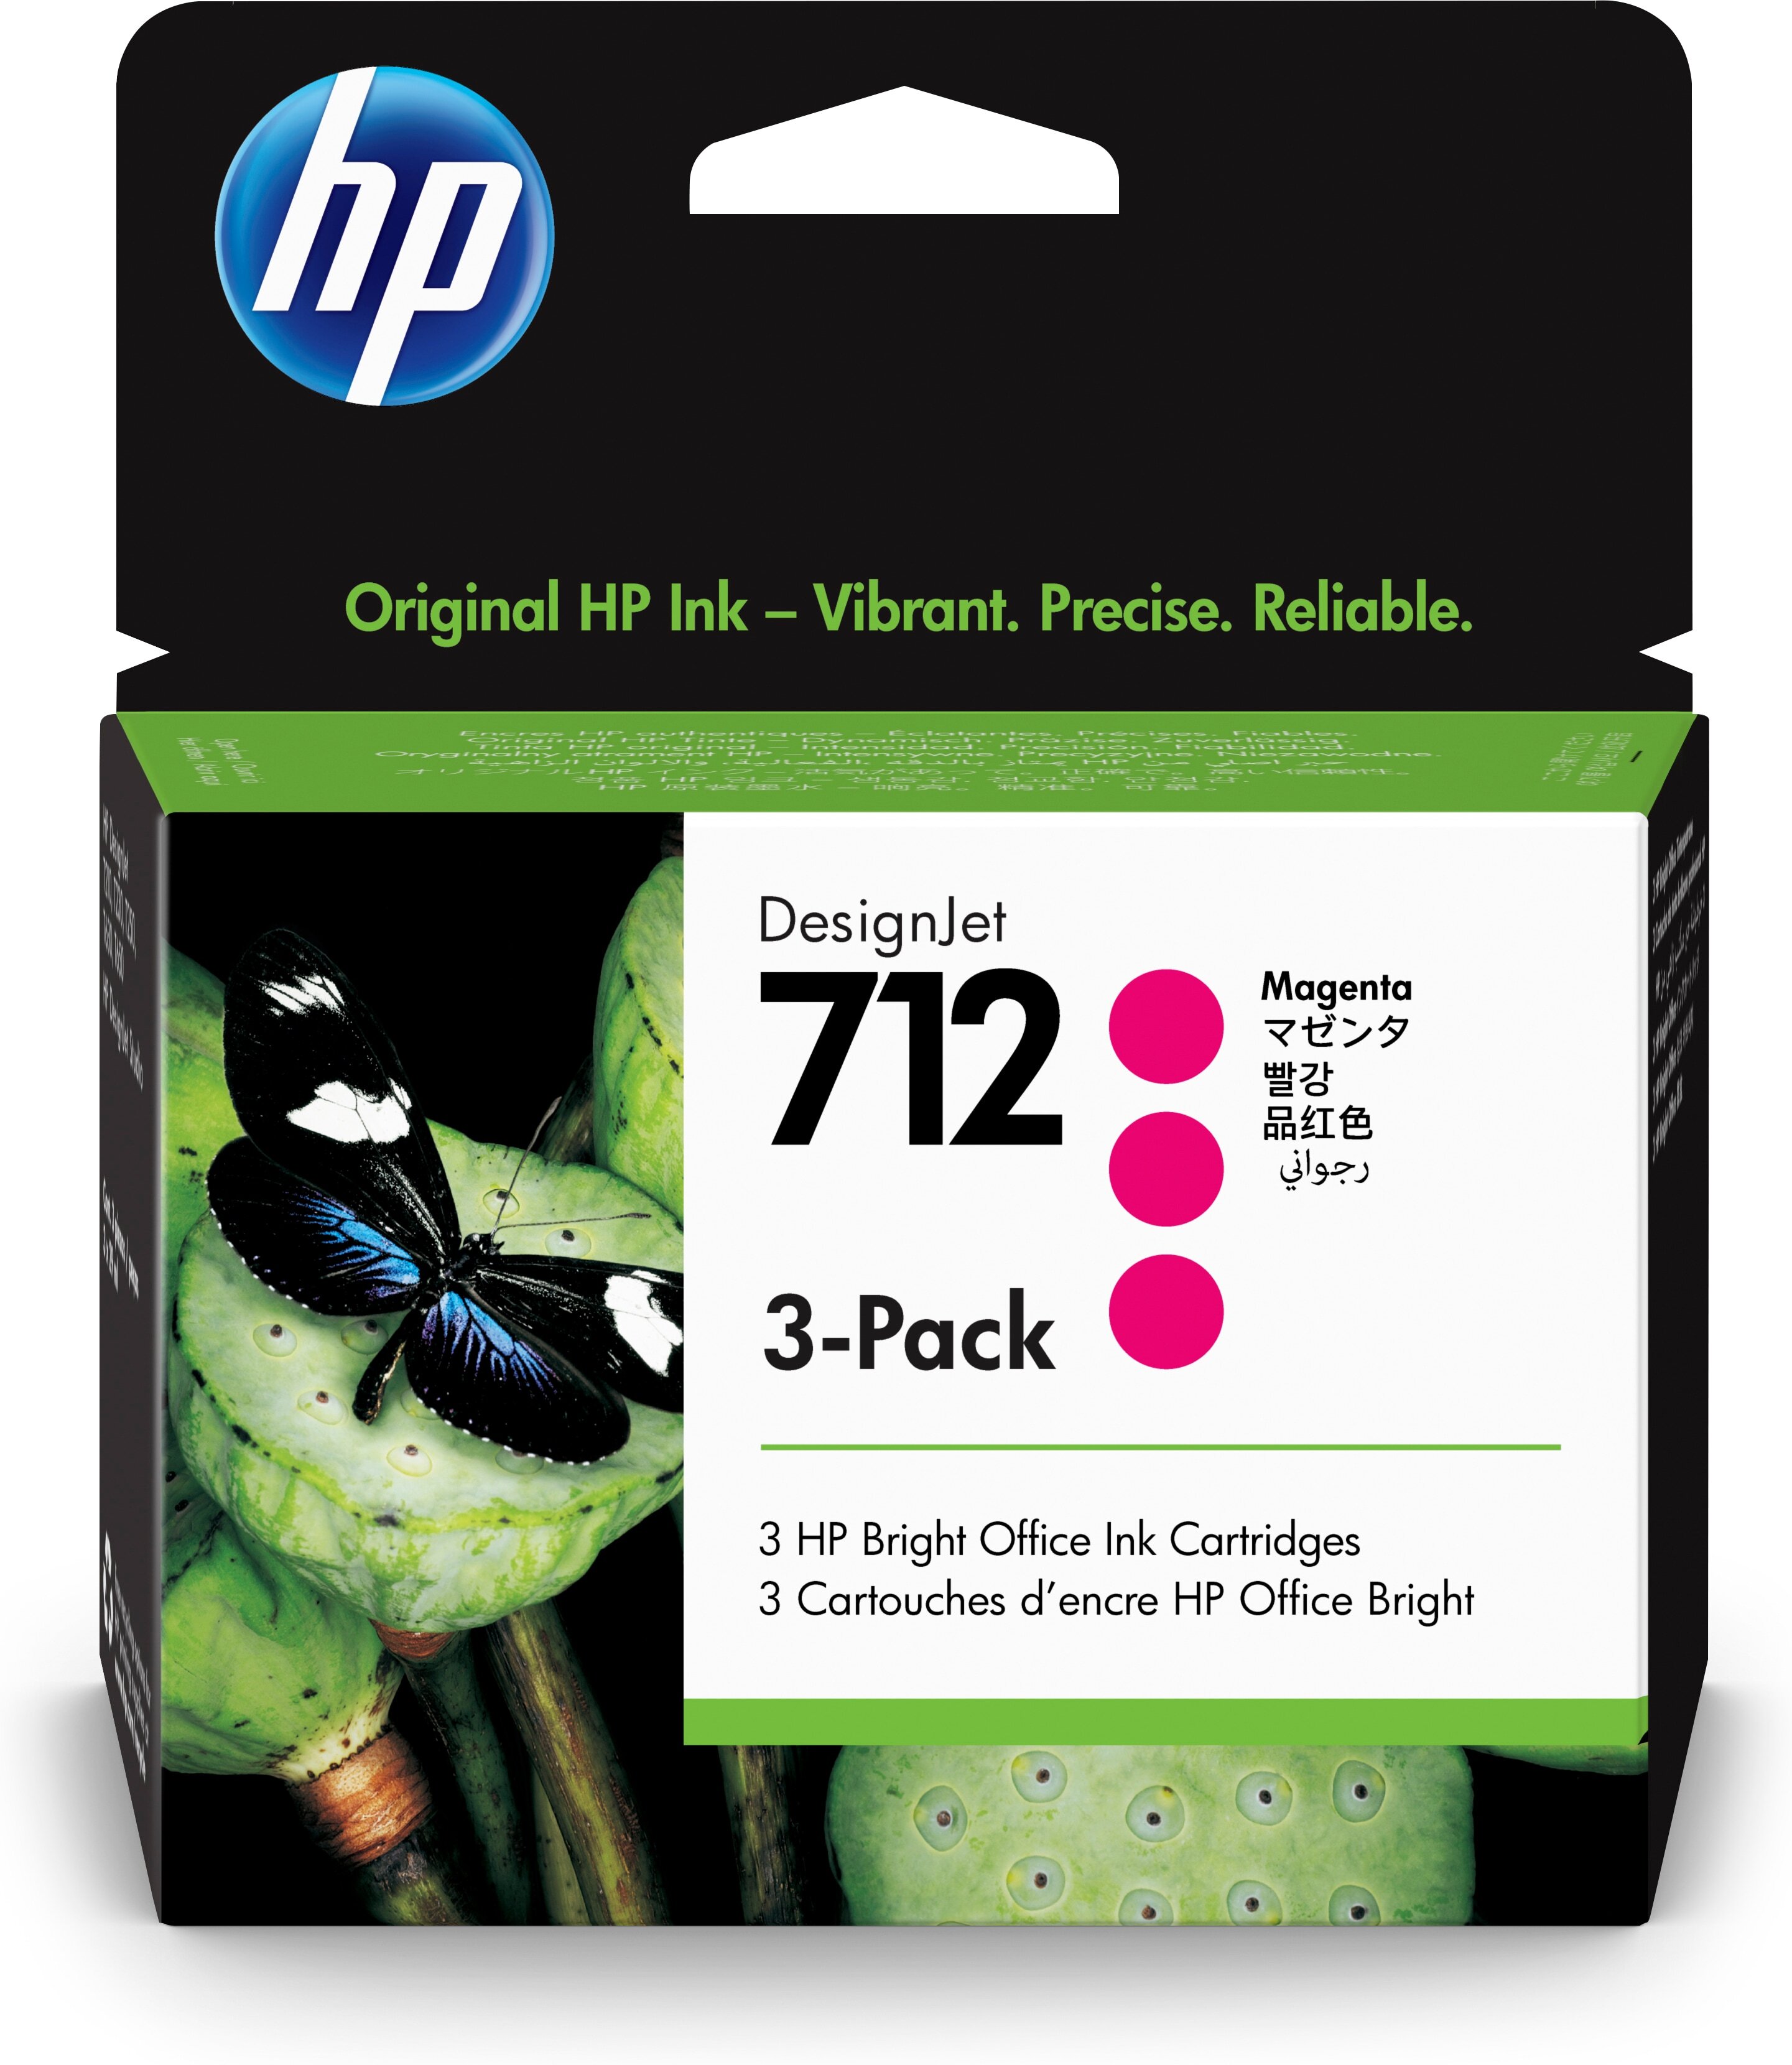 HP 712 29 ml inktcartridge voor DesignJet, magenta, 3-pack multi pack / magenta